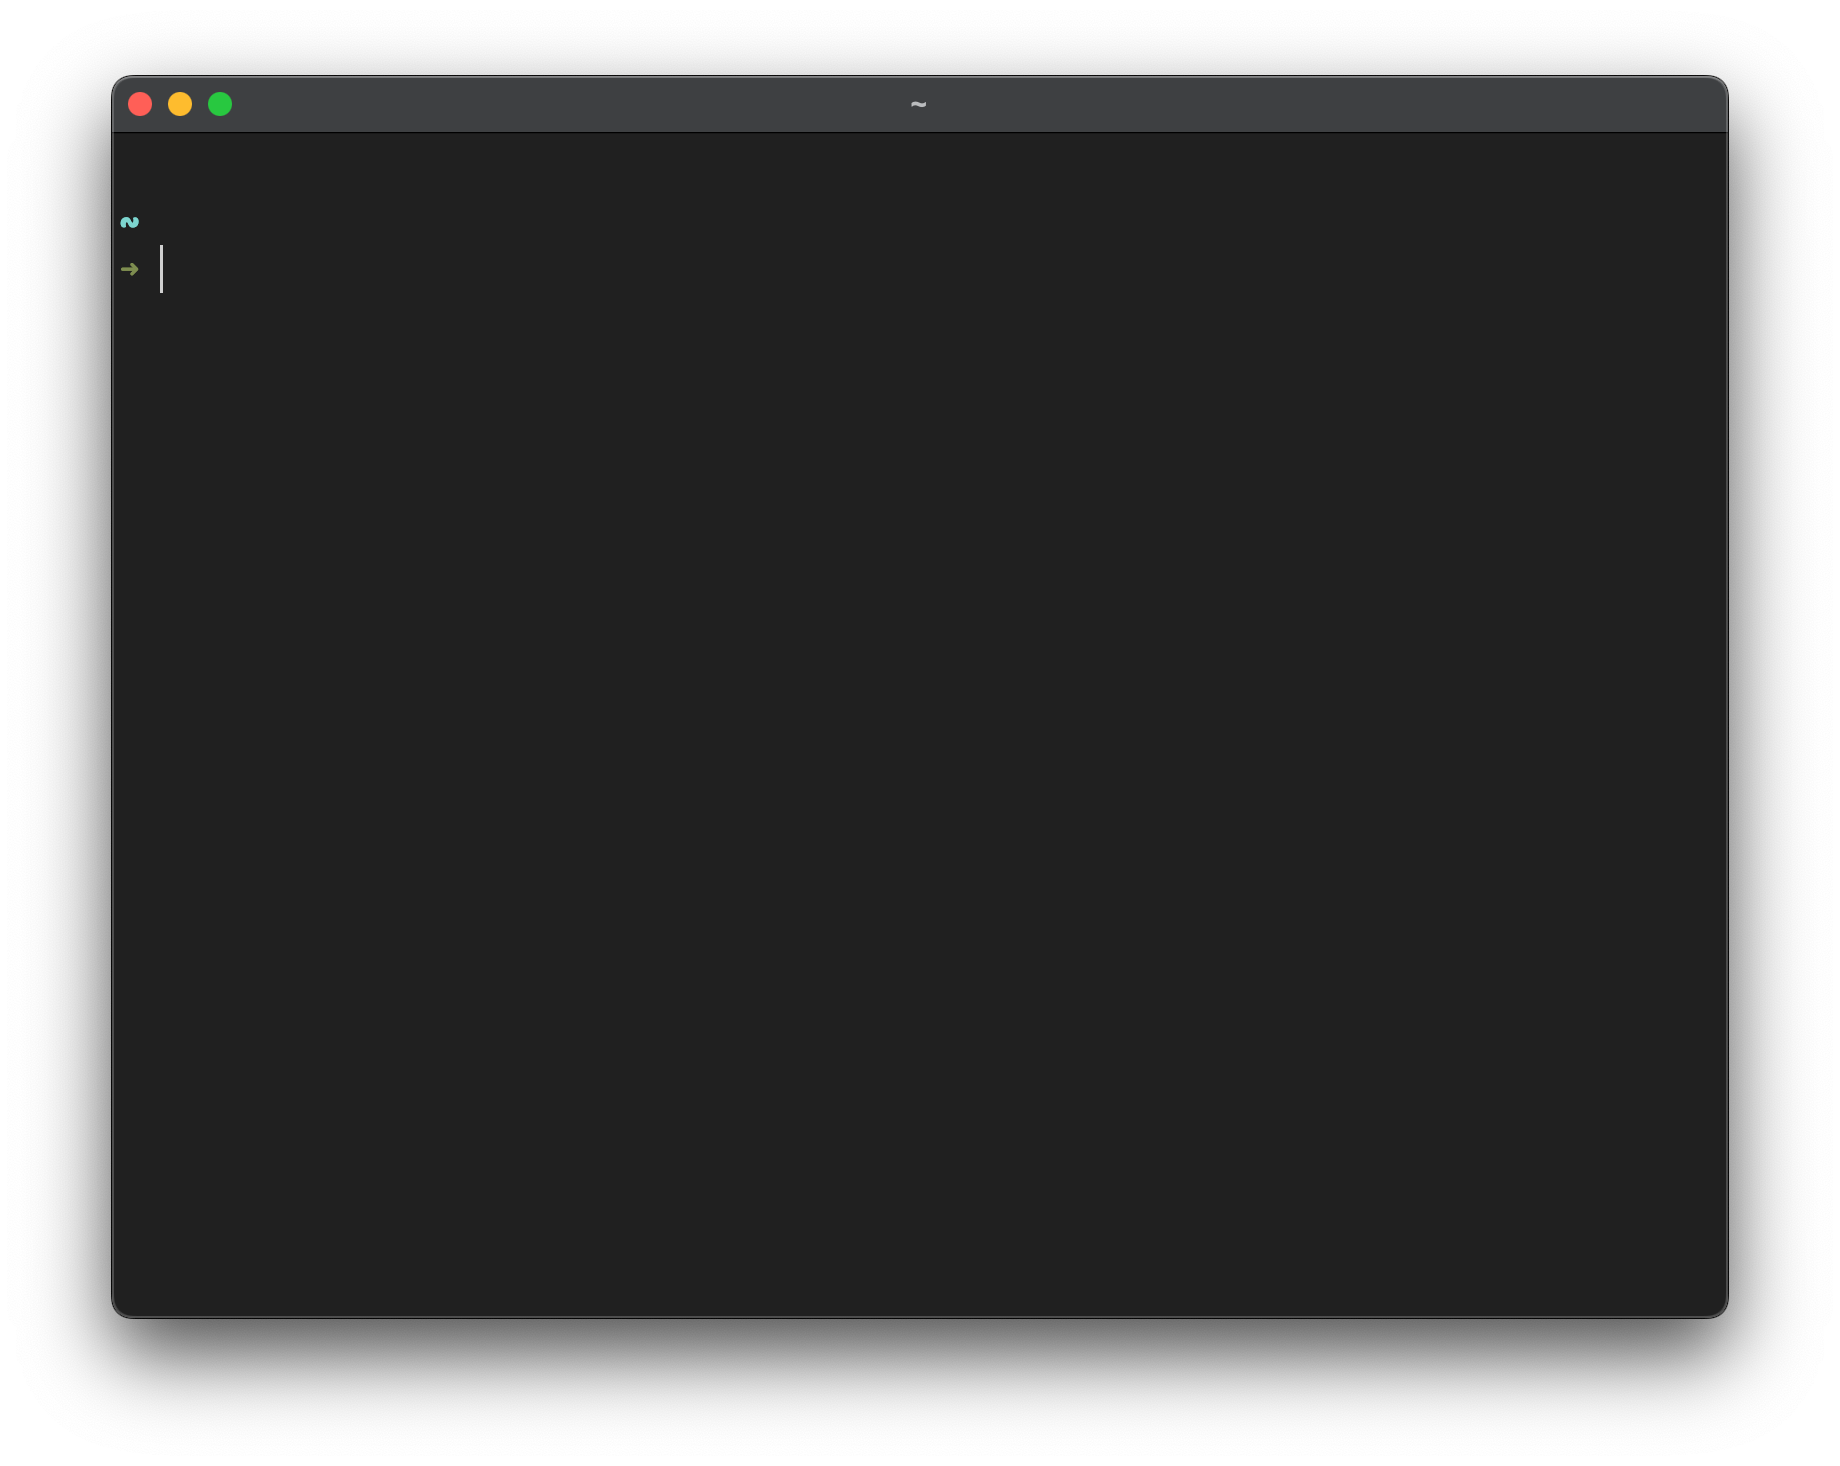 screenshot of blank terminal window